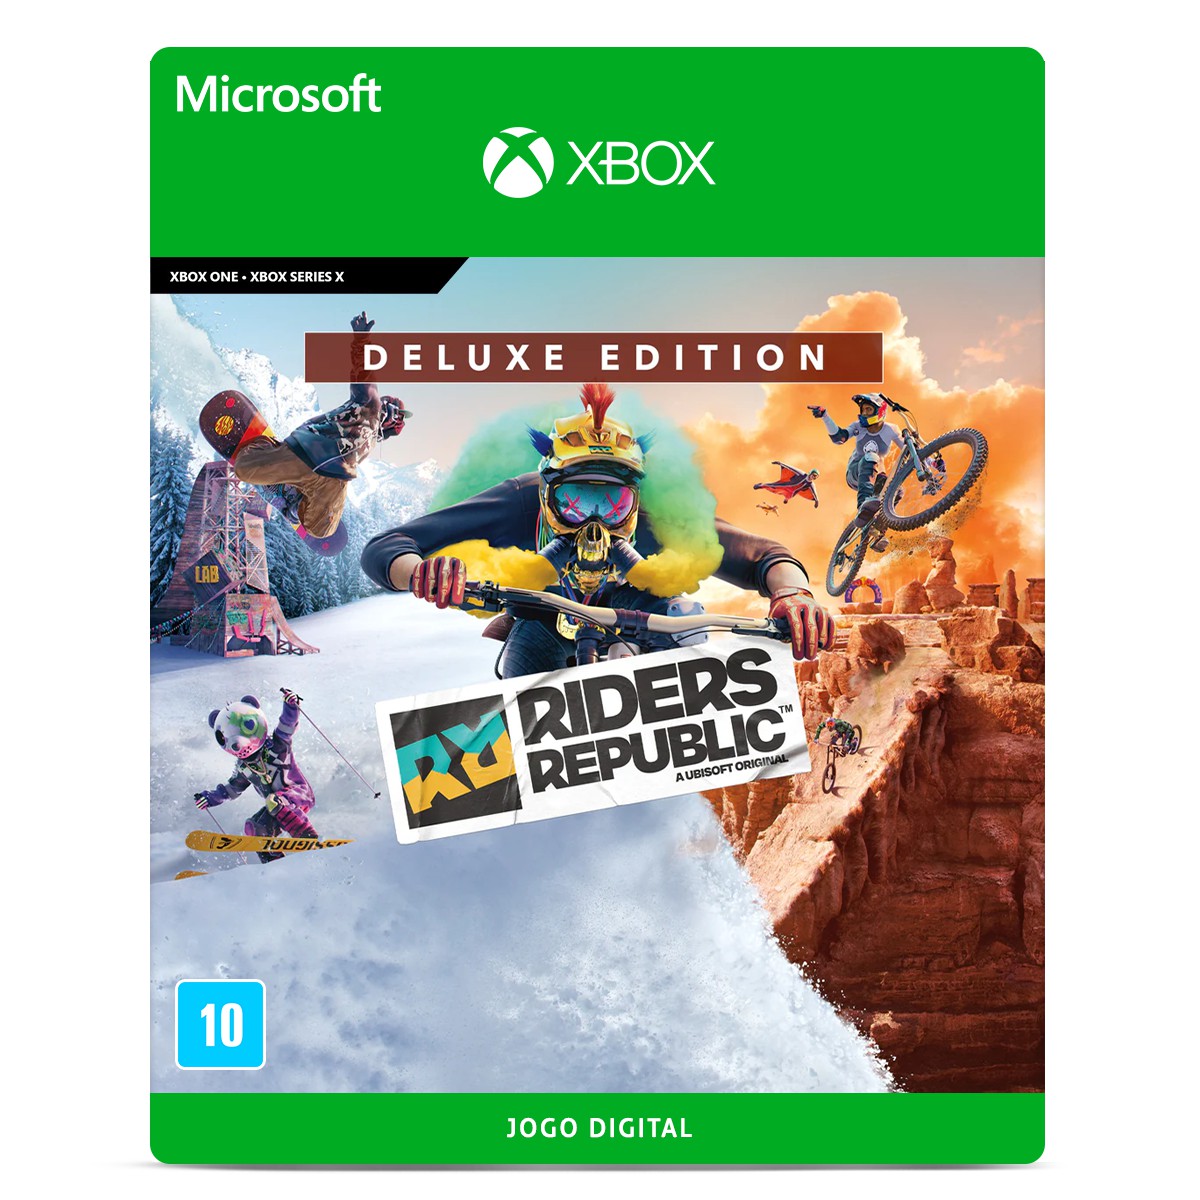 FIFA 23 Edição Standard Xbox One Código Digital - Pentakill Store